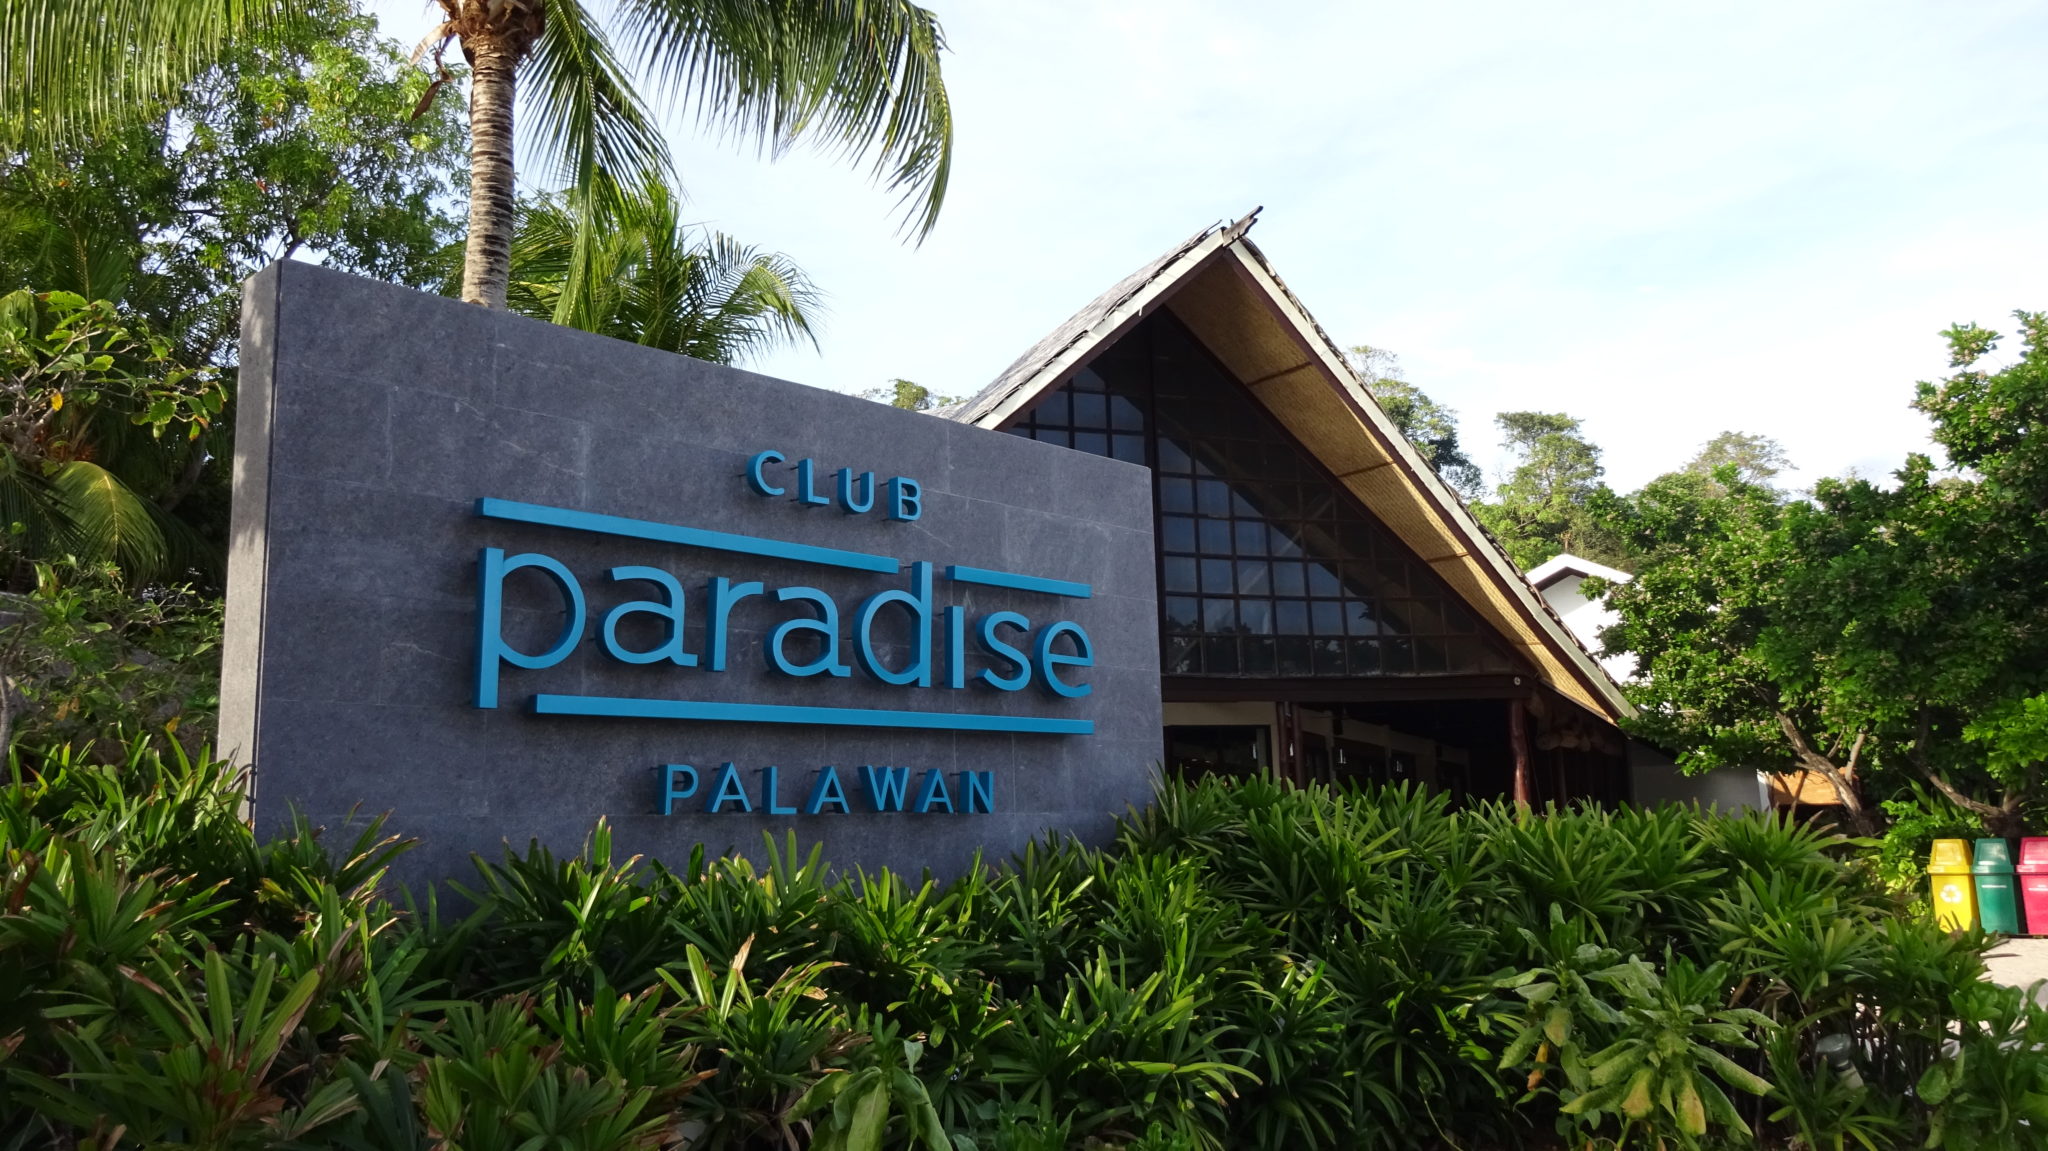 Club Paradise Palawan sign on a grey stone wall